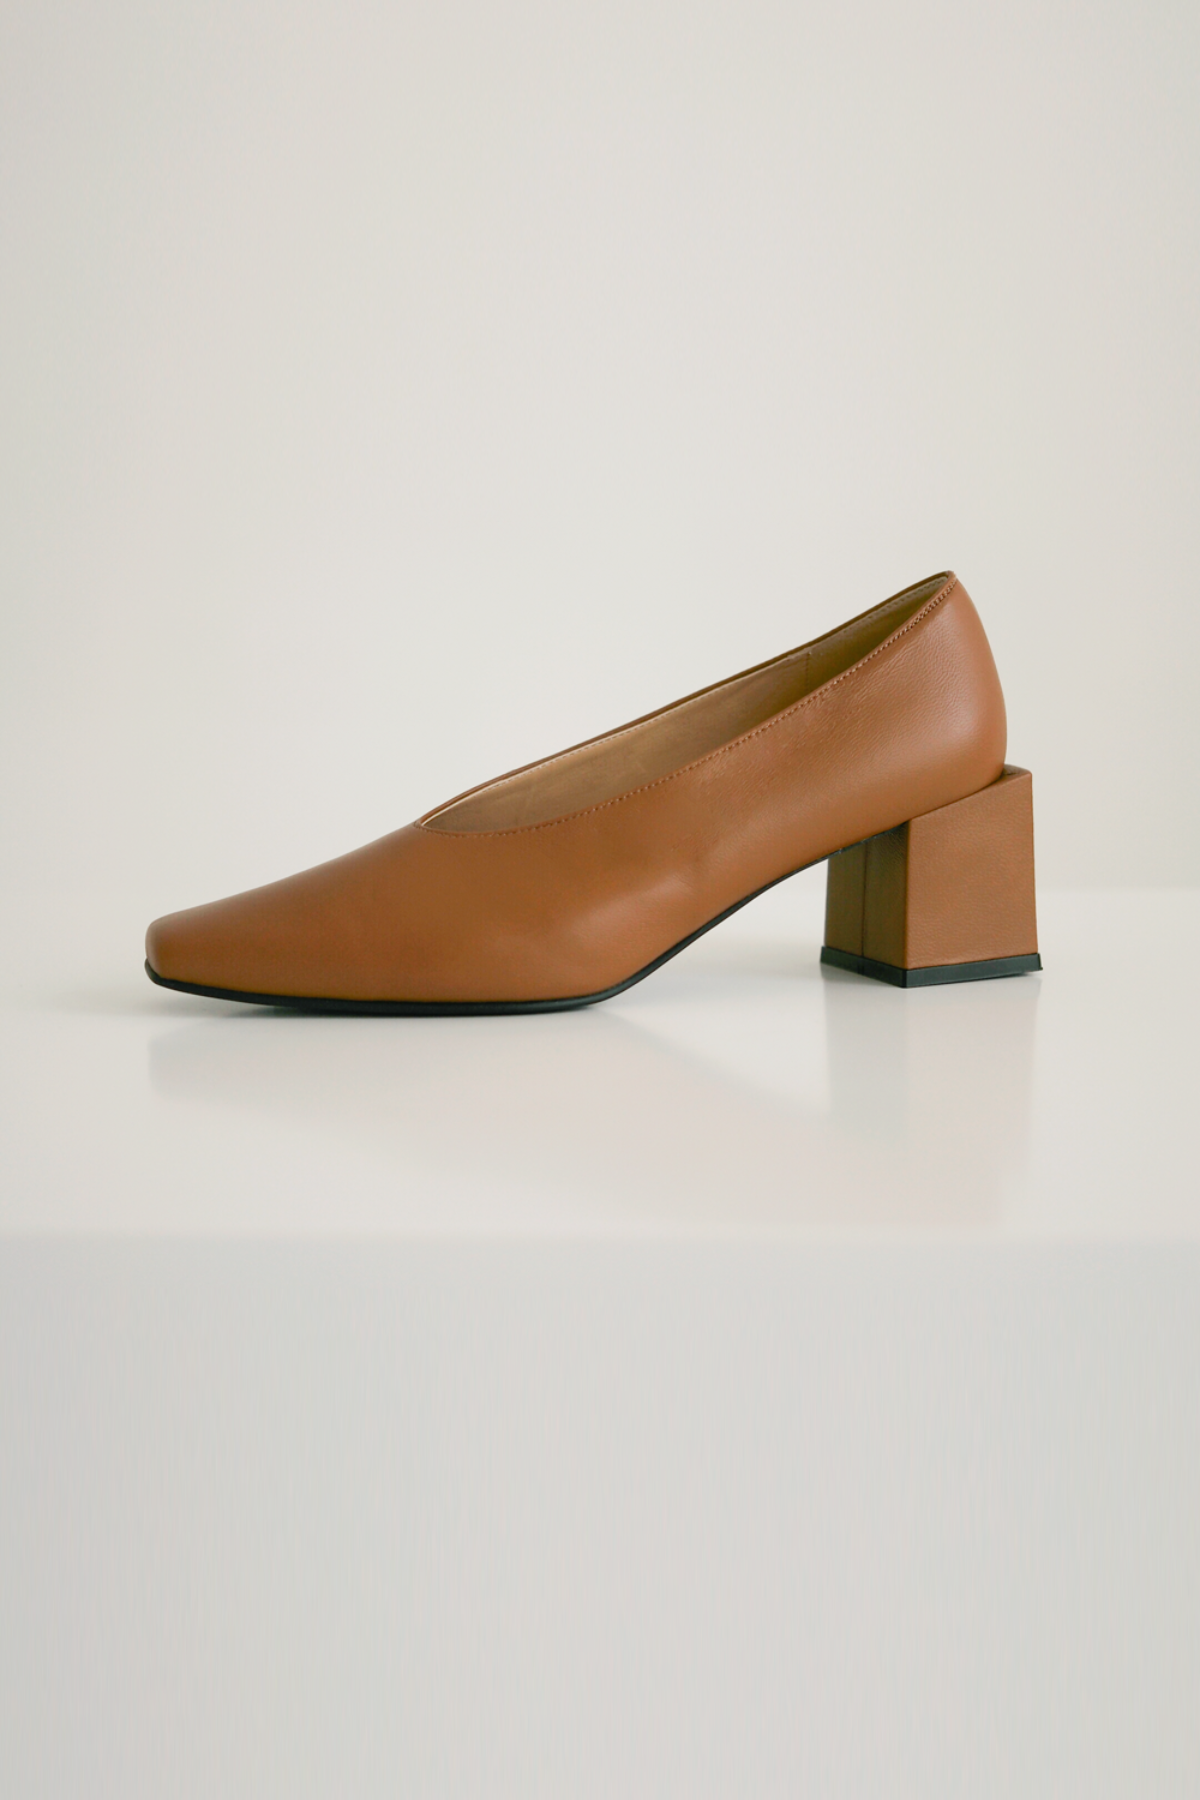 ANTHÈSE venica square middle heel, camel (40%)당일발송